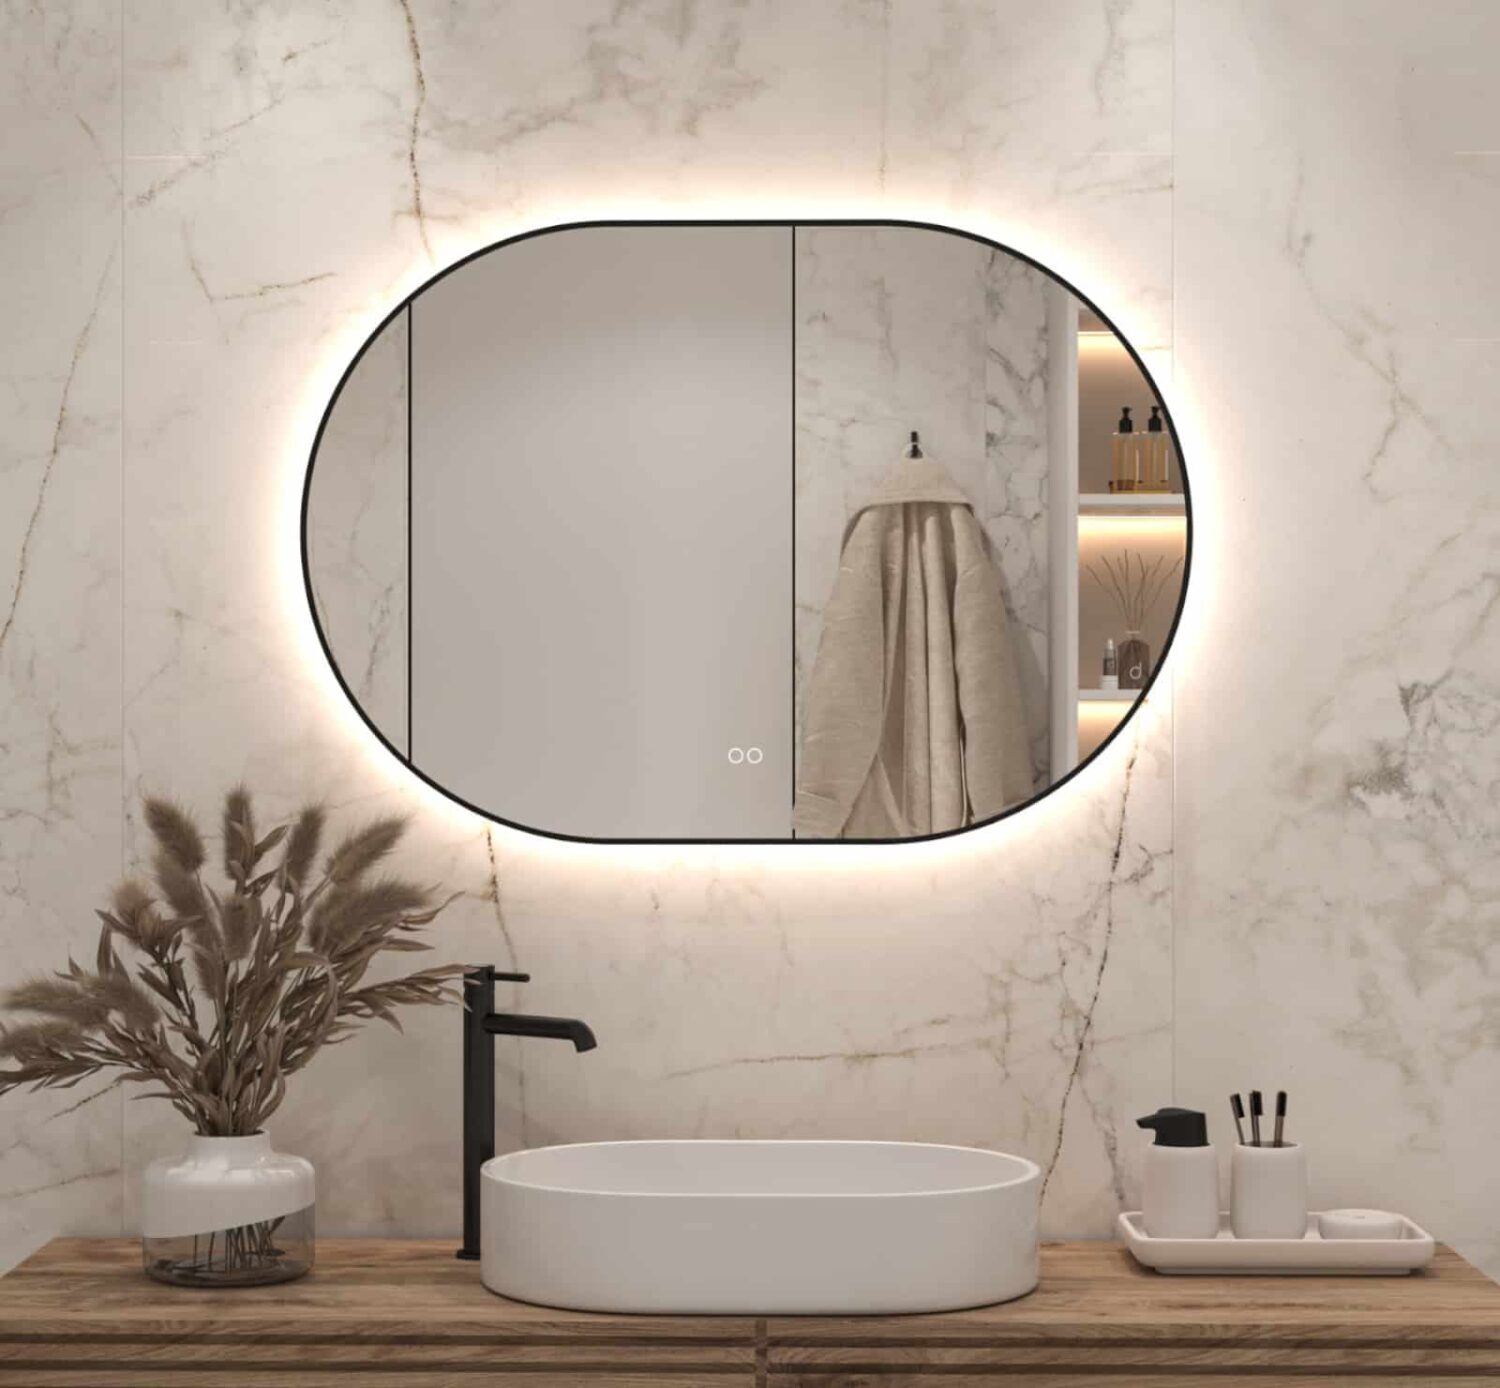 Malaise stok Over instelling Ovale badkamerspiegel met LED verlichting, verwarming, touch sensor,  kleurenwissel en mat zwart frame 100x70 cm - Designspiegels